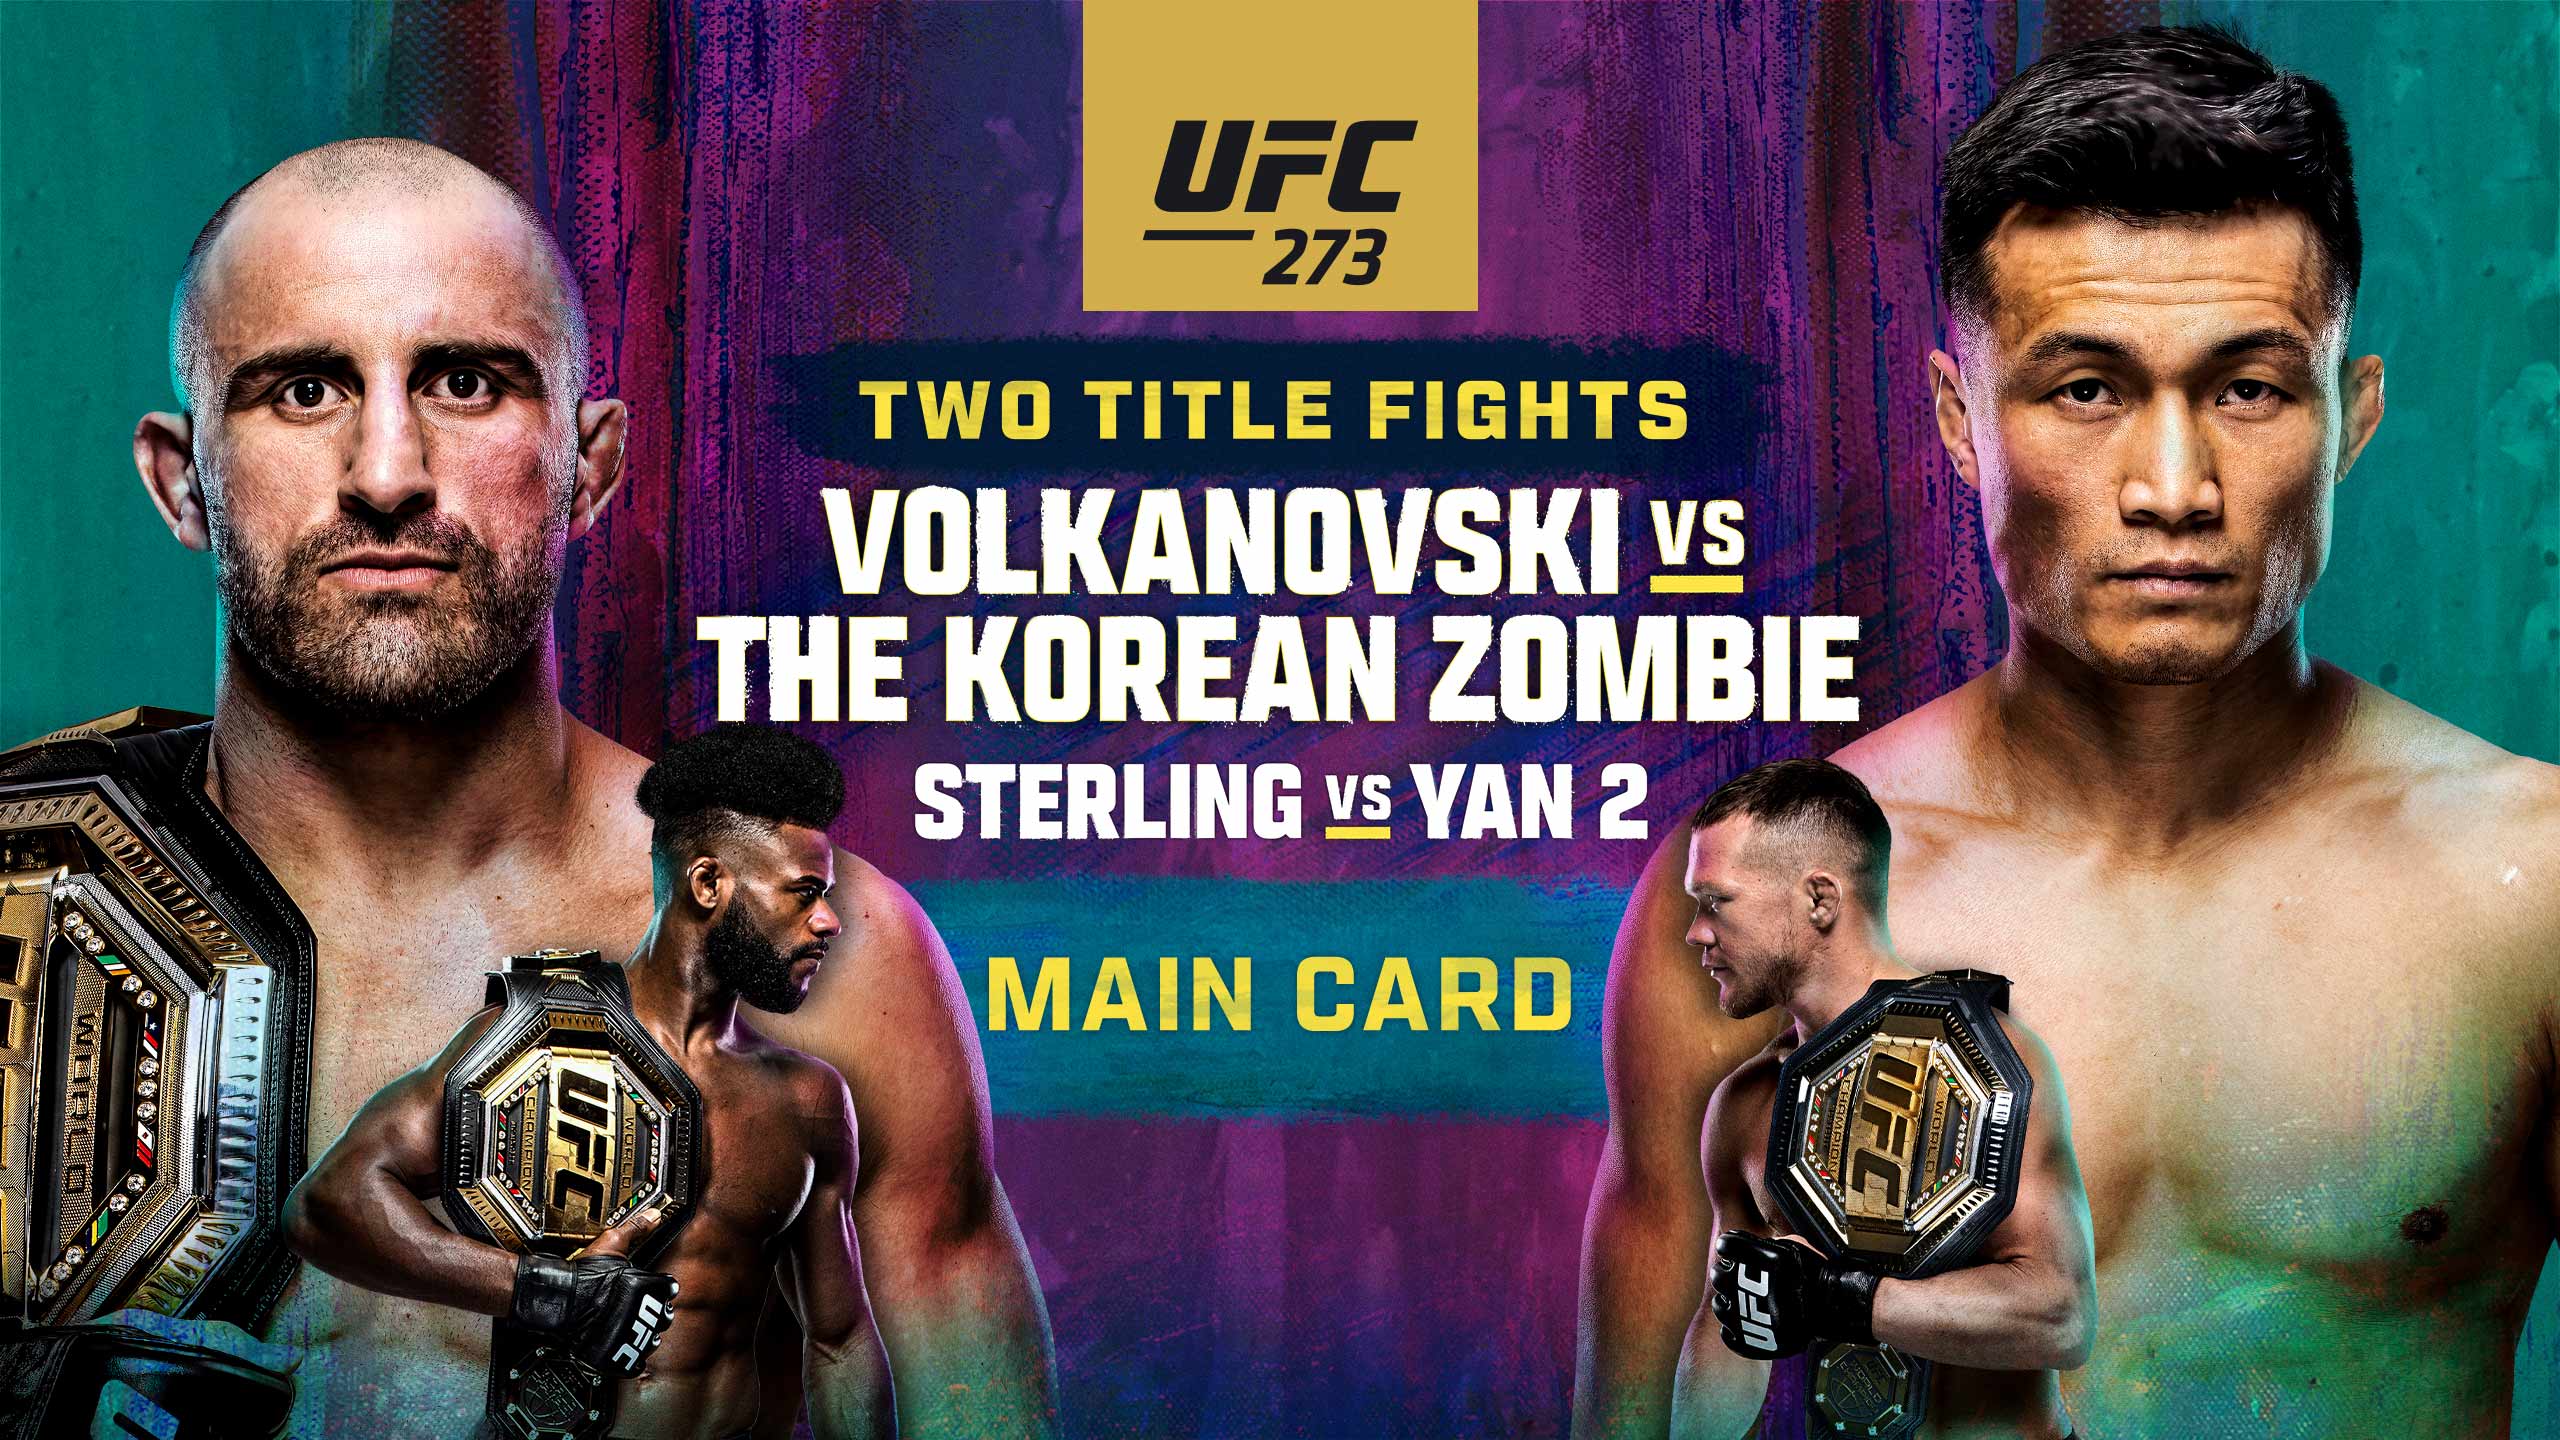 How to Watch UFC 273: Volkanovski vs. The Korean Zombie